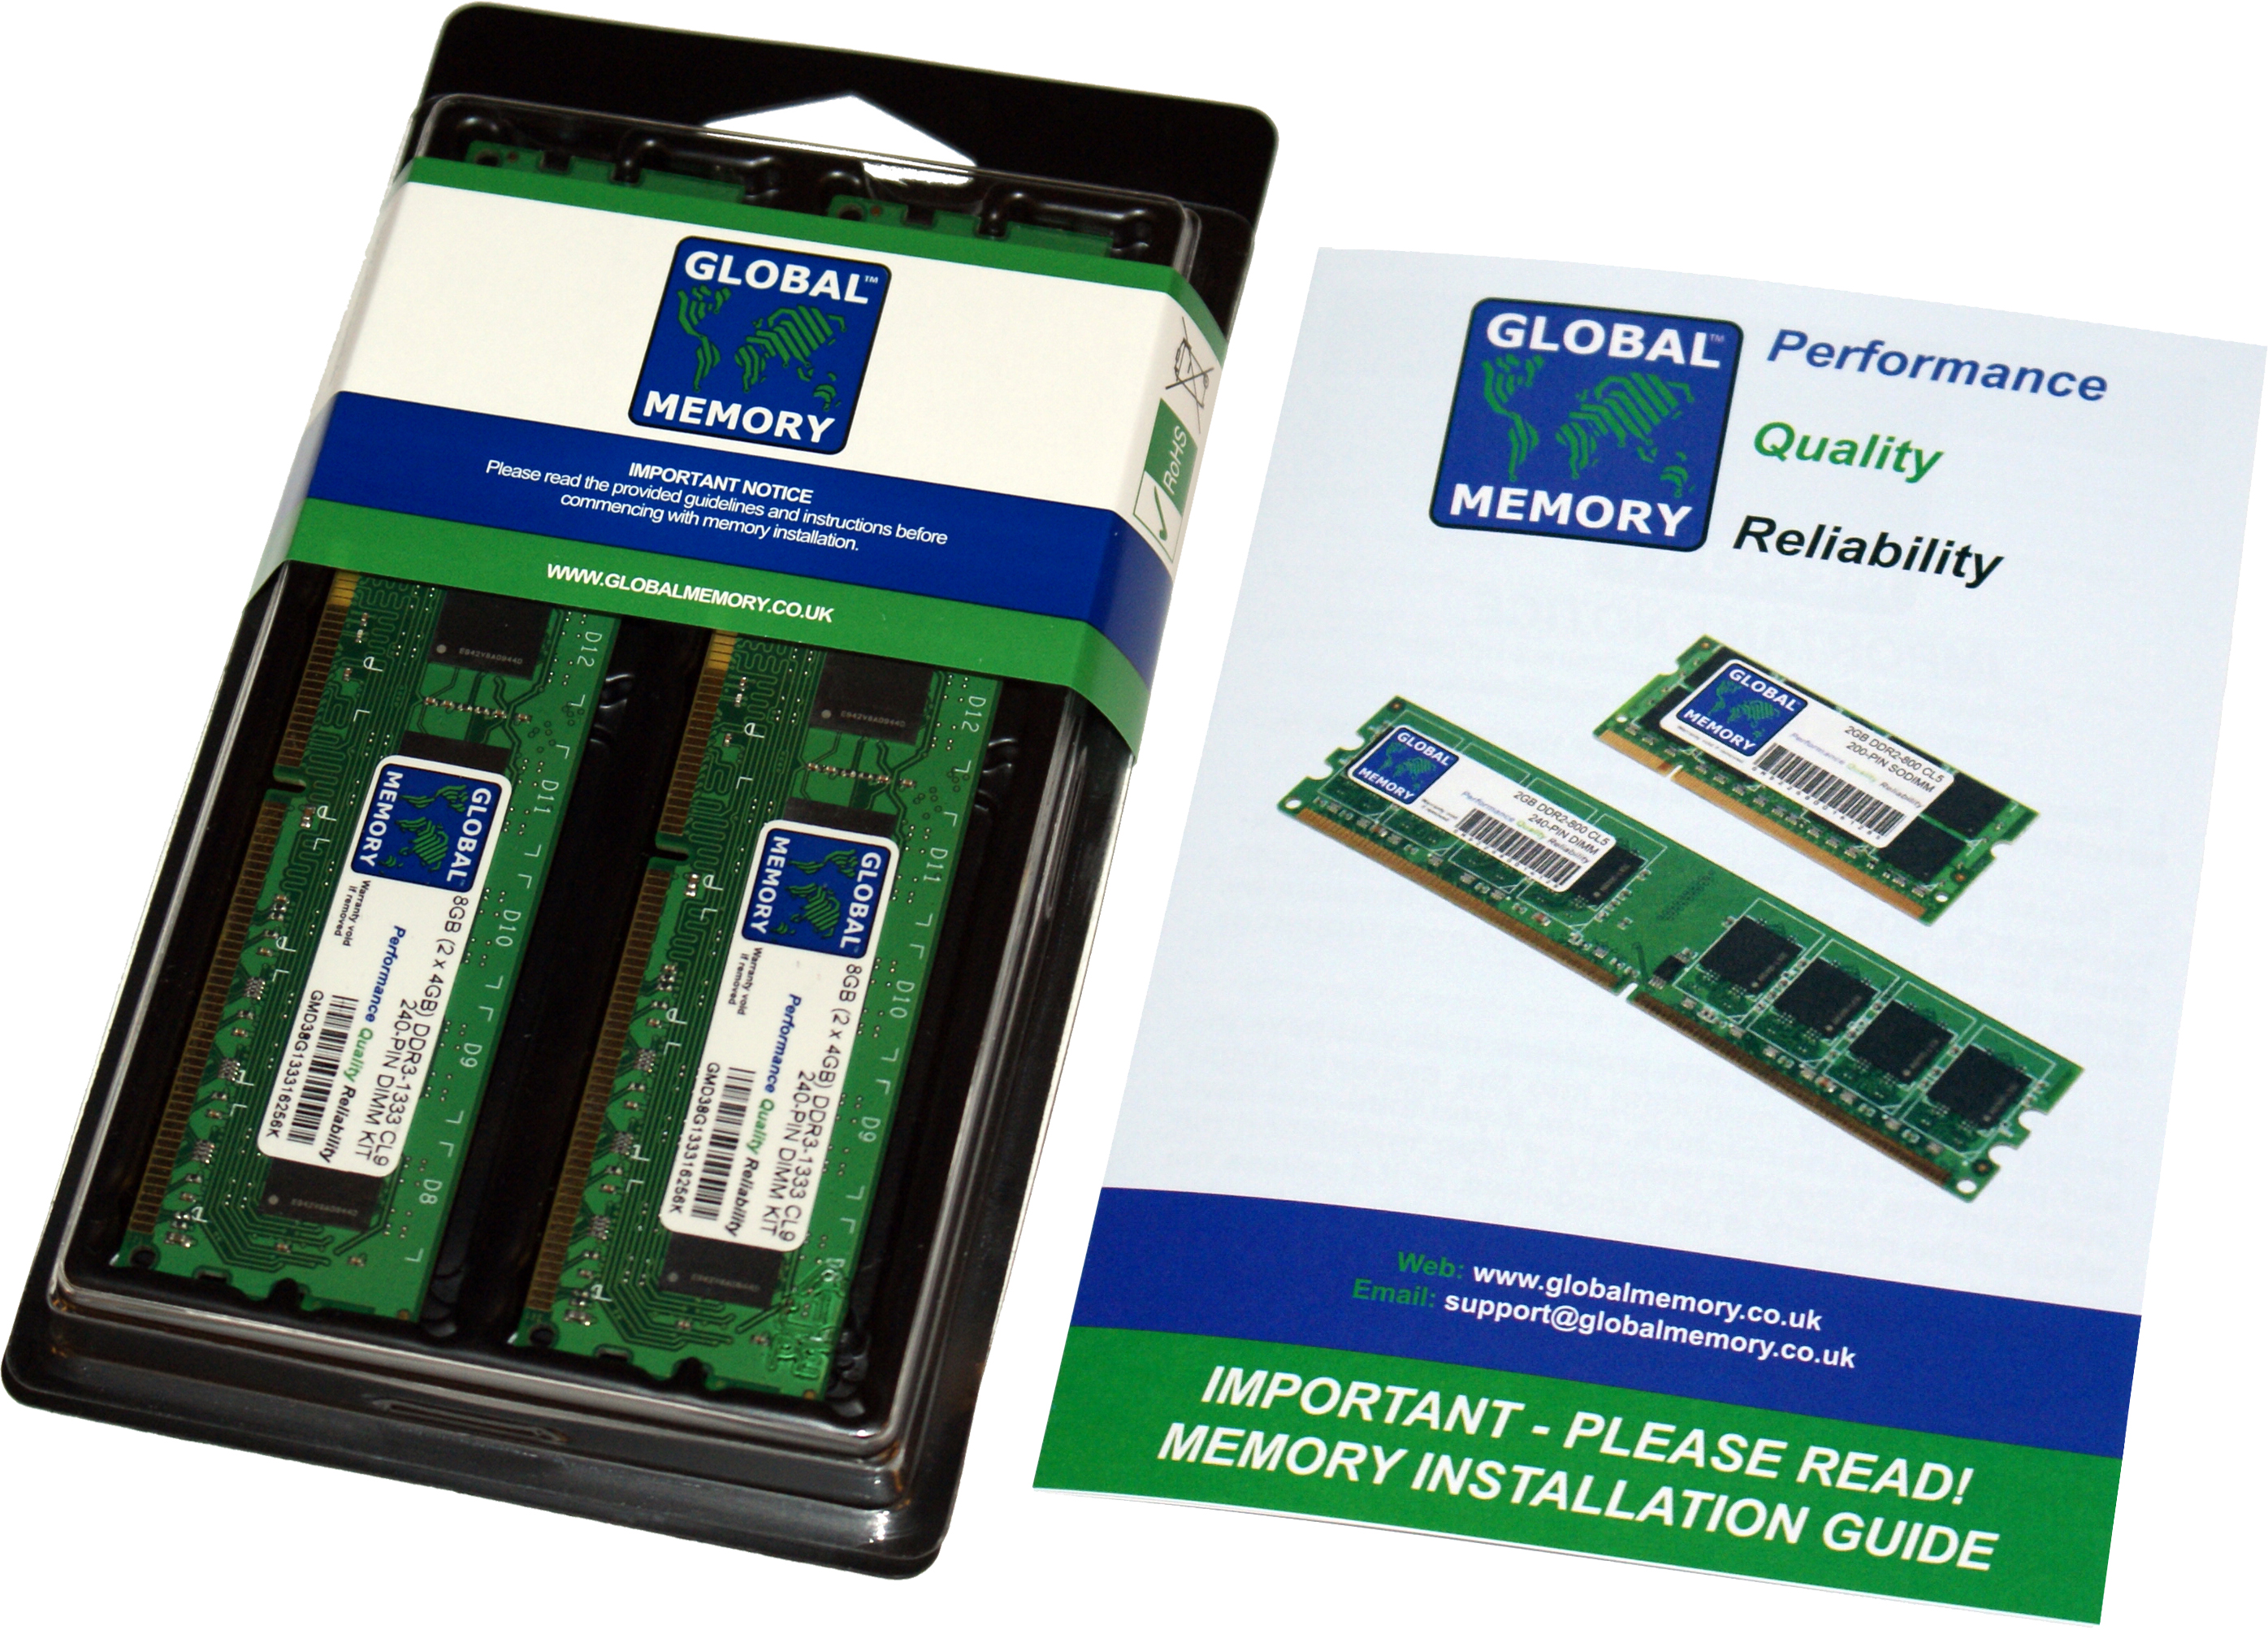 8GB (2 x 4GB) DDR3 1866MHz PC3-14900 240-PIN DIMM MEMORY RAM KIT FOR PC DESKTOPS/MOTHERBOARDS